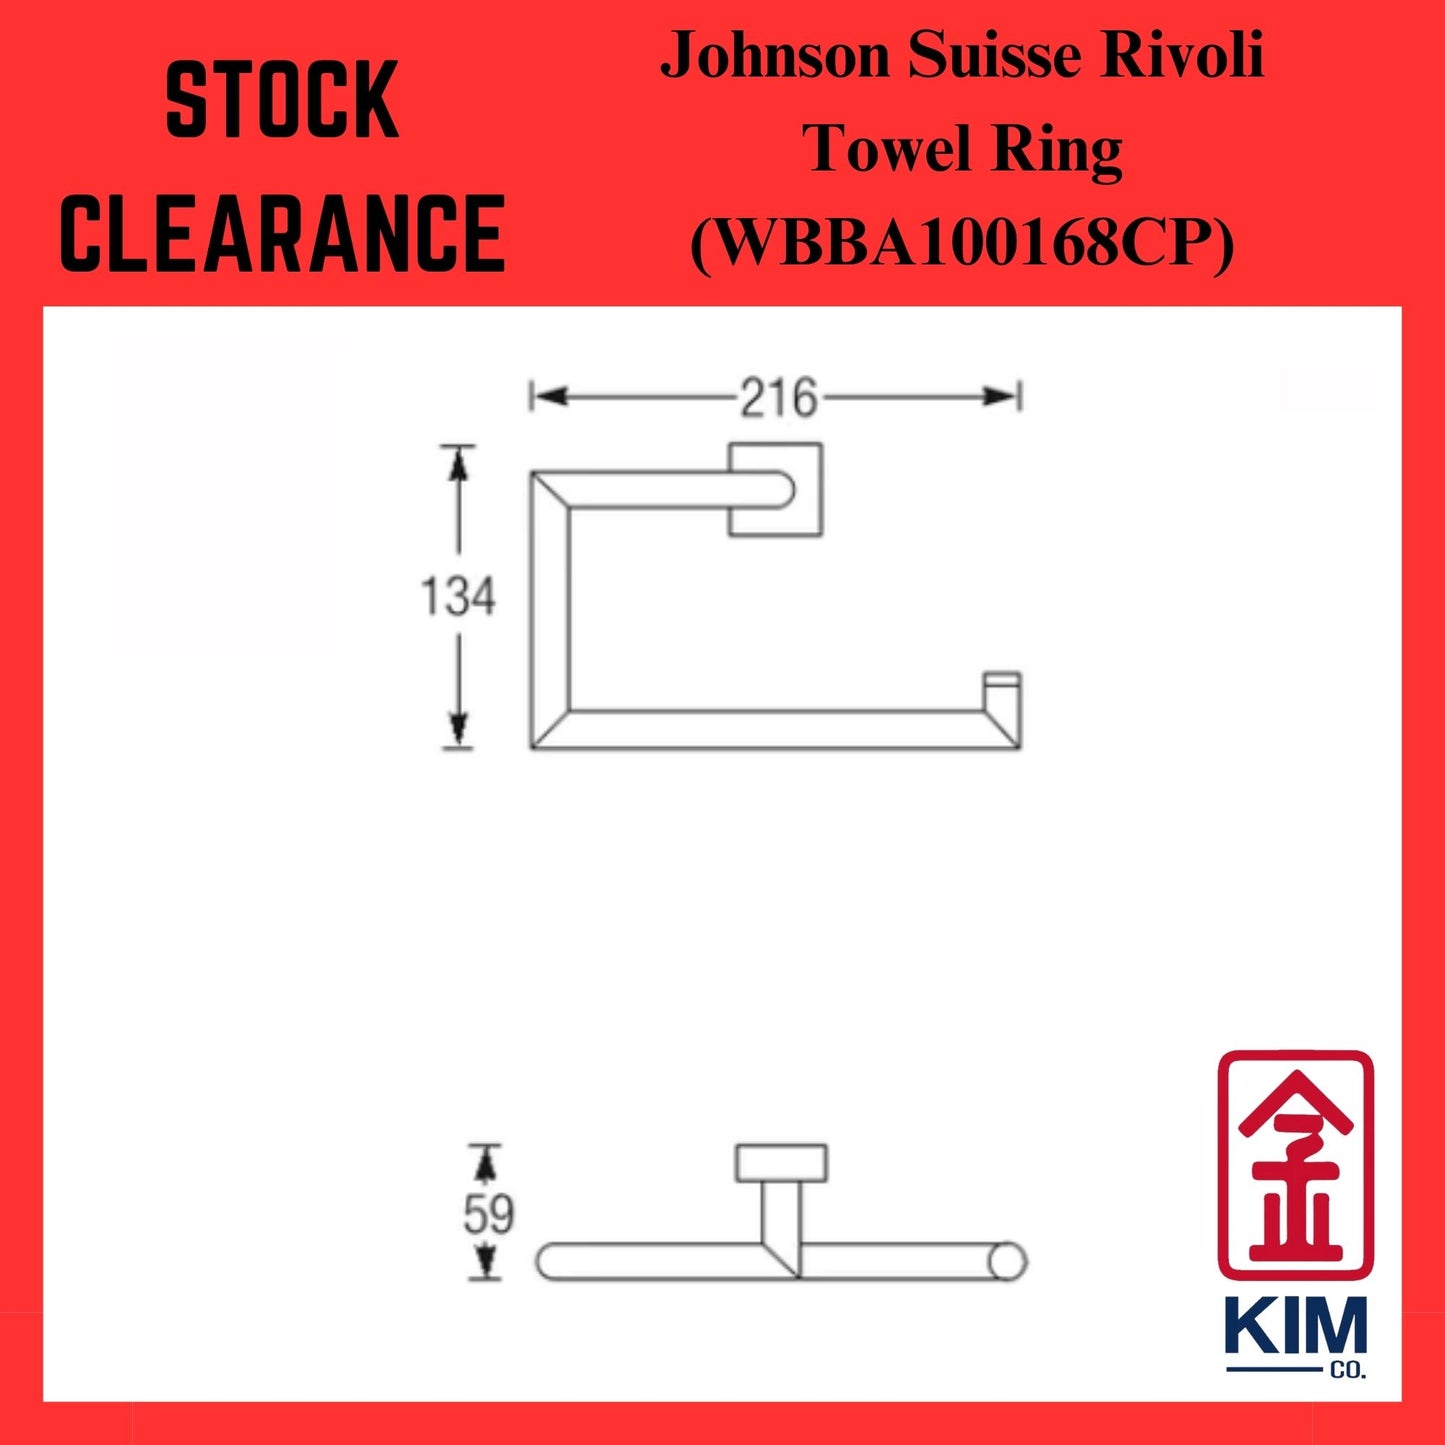 ( Stock Clearance ) Johnson Suisse Rivoli Towel Ring (WBBA100168CP)